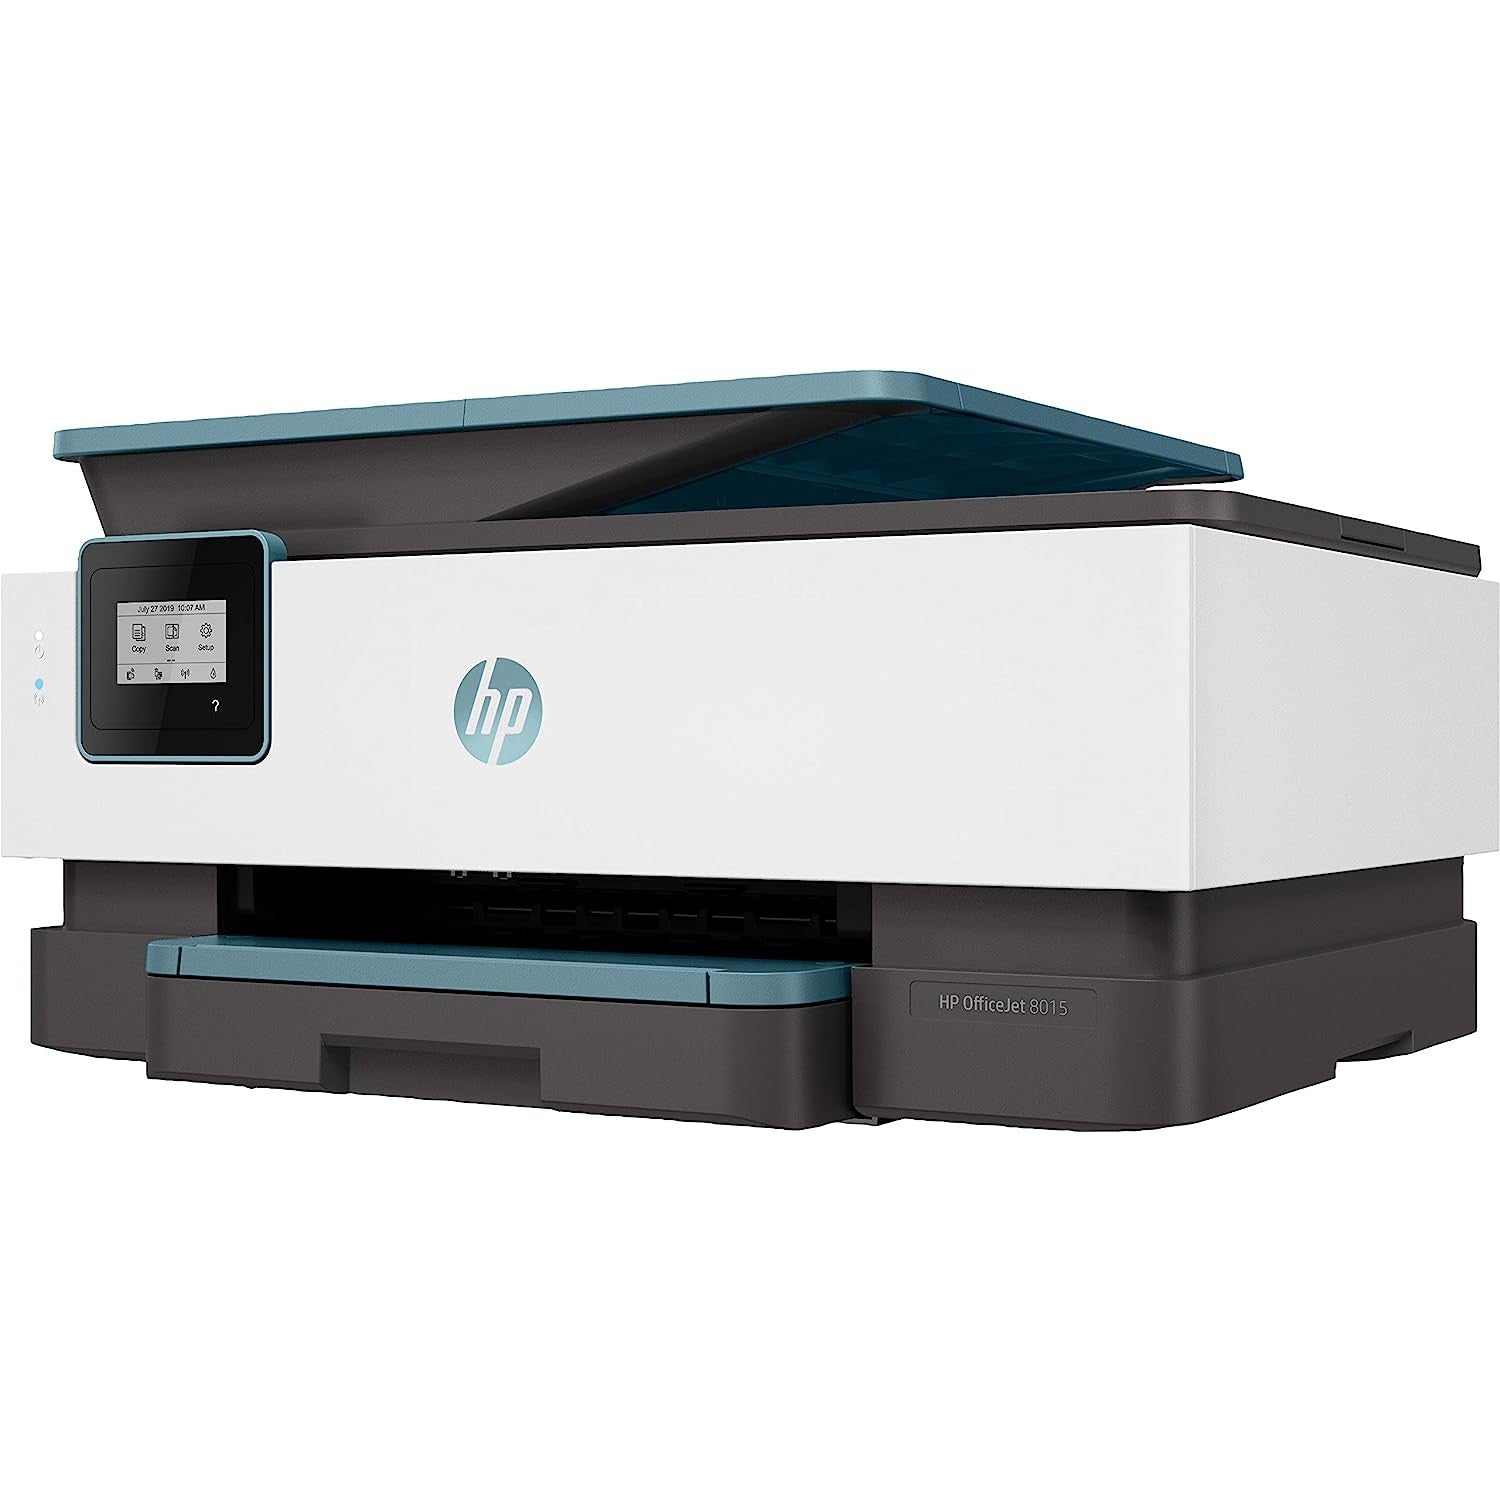 HP OfficeJet 8015 Colour Inkjet Wireless All-in-One Printer - New